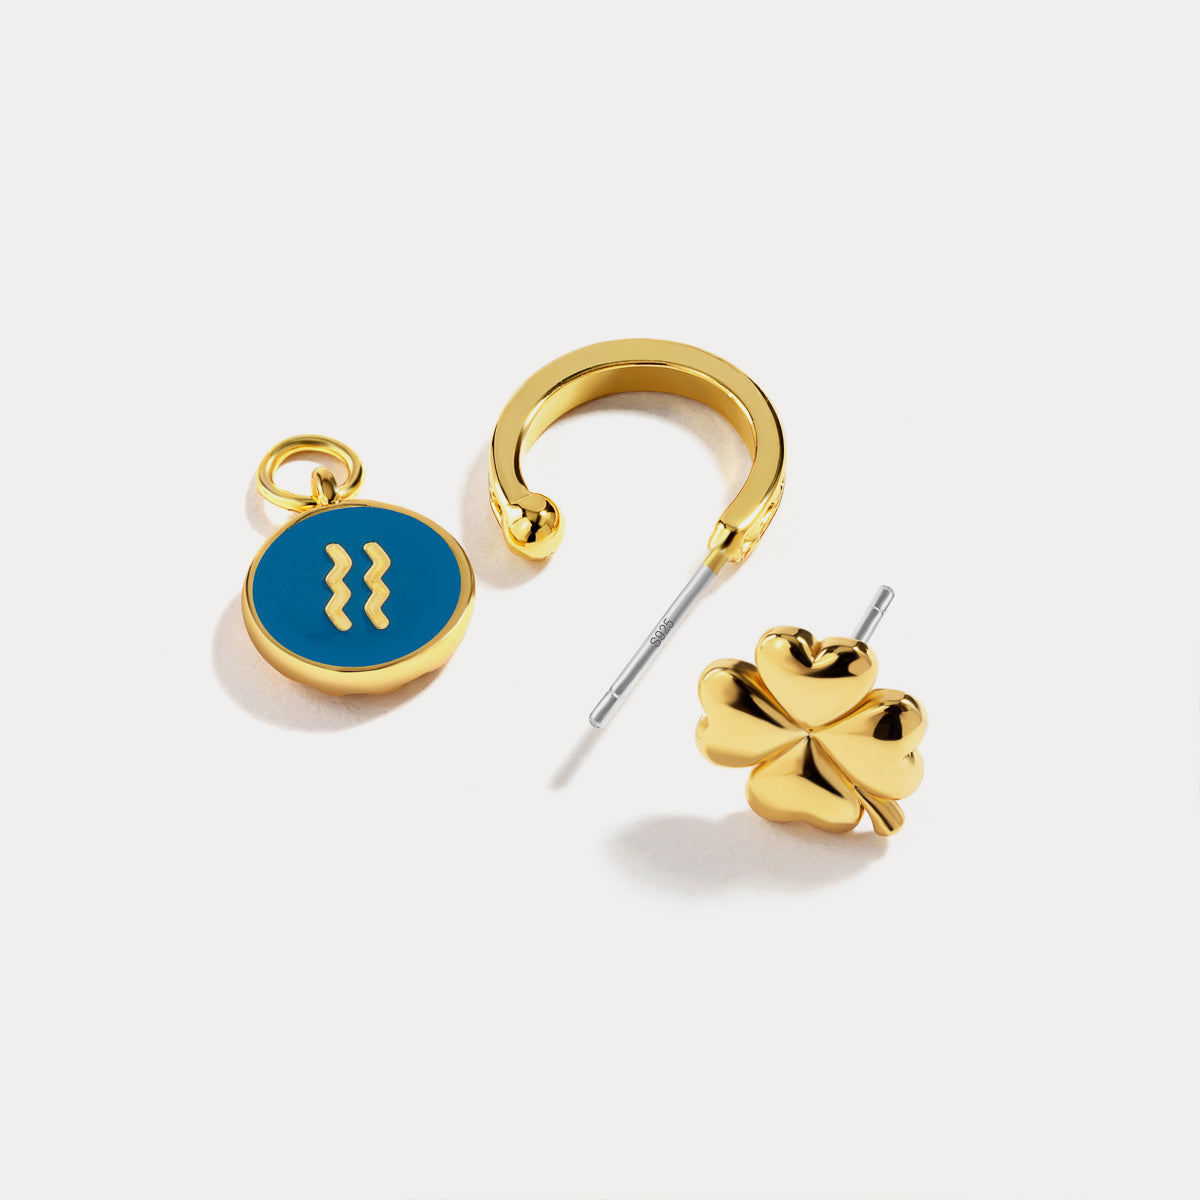 Aquarius astrological sign mismatch earrings